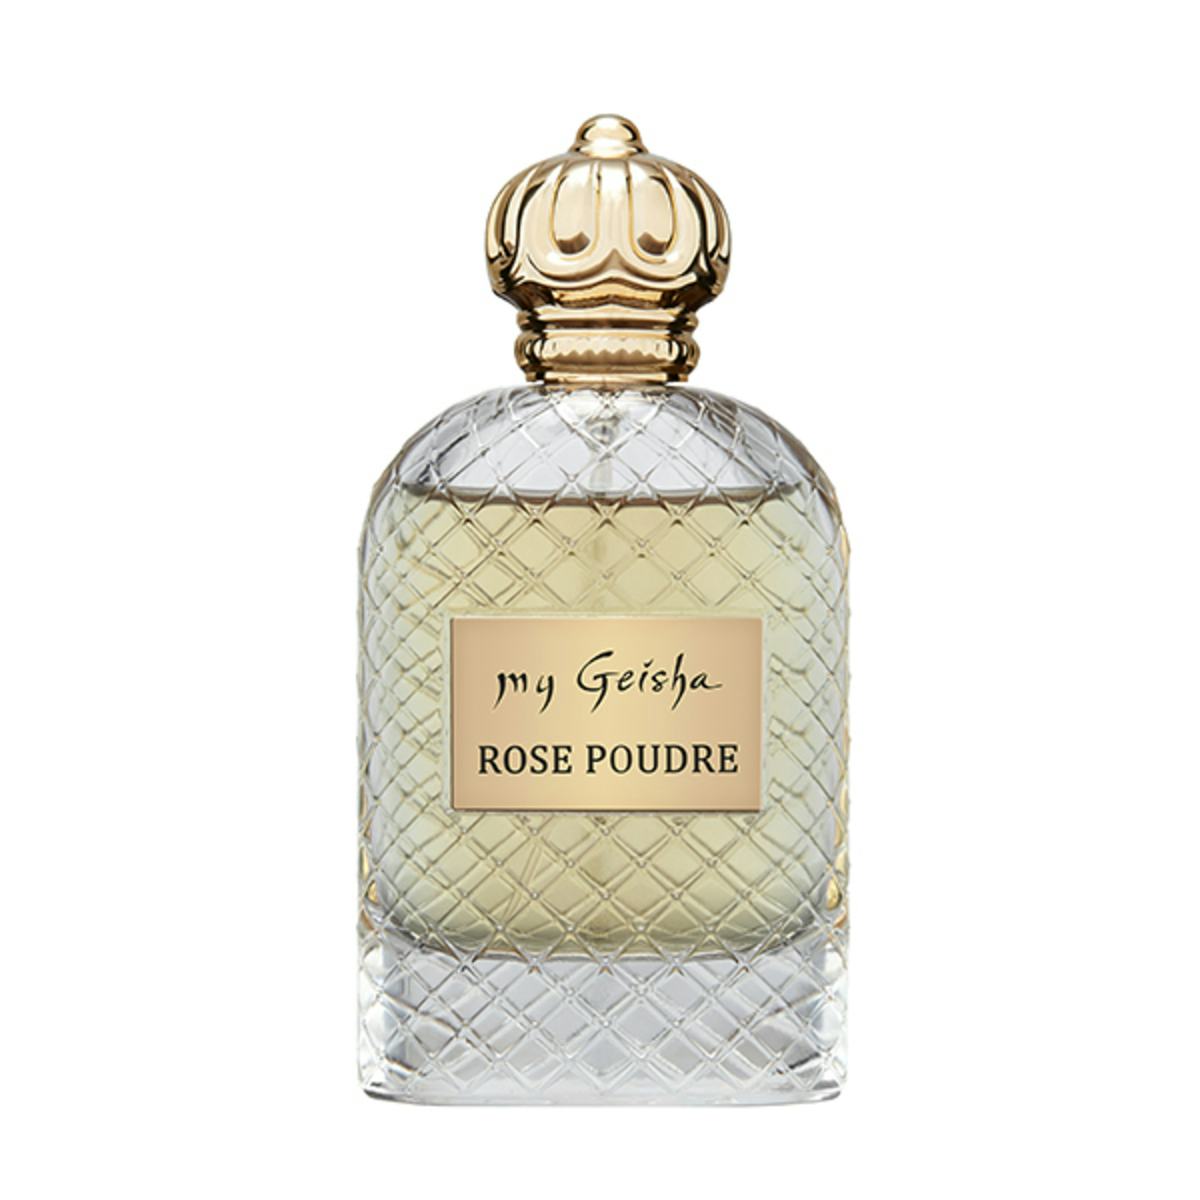 Extrait de parfum Rose Poudre 100 ml, artisanal product for direct sale in Switzerland